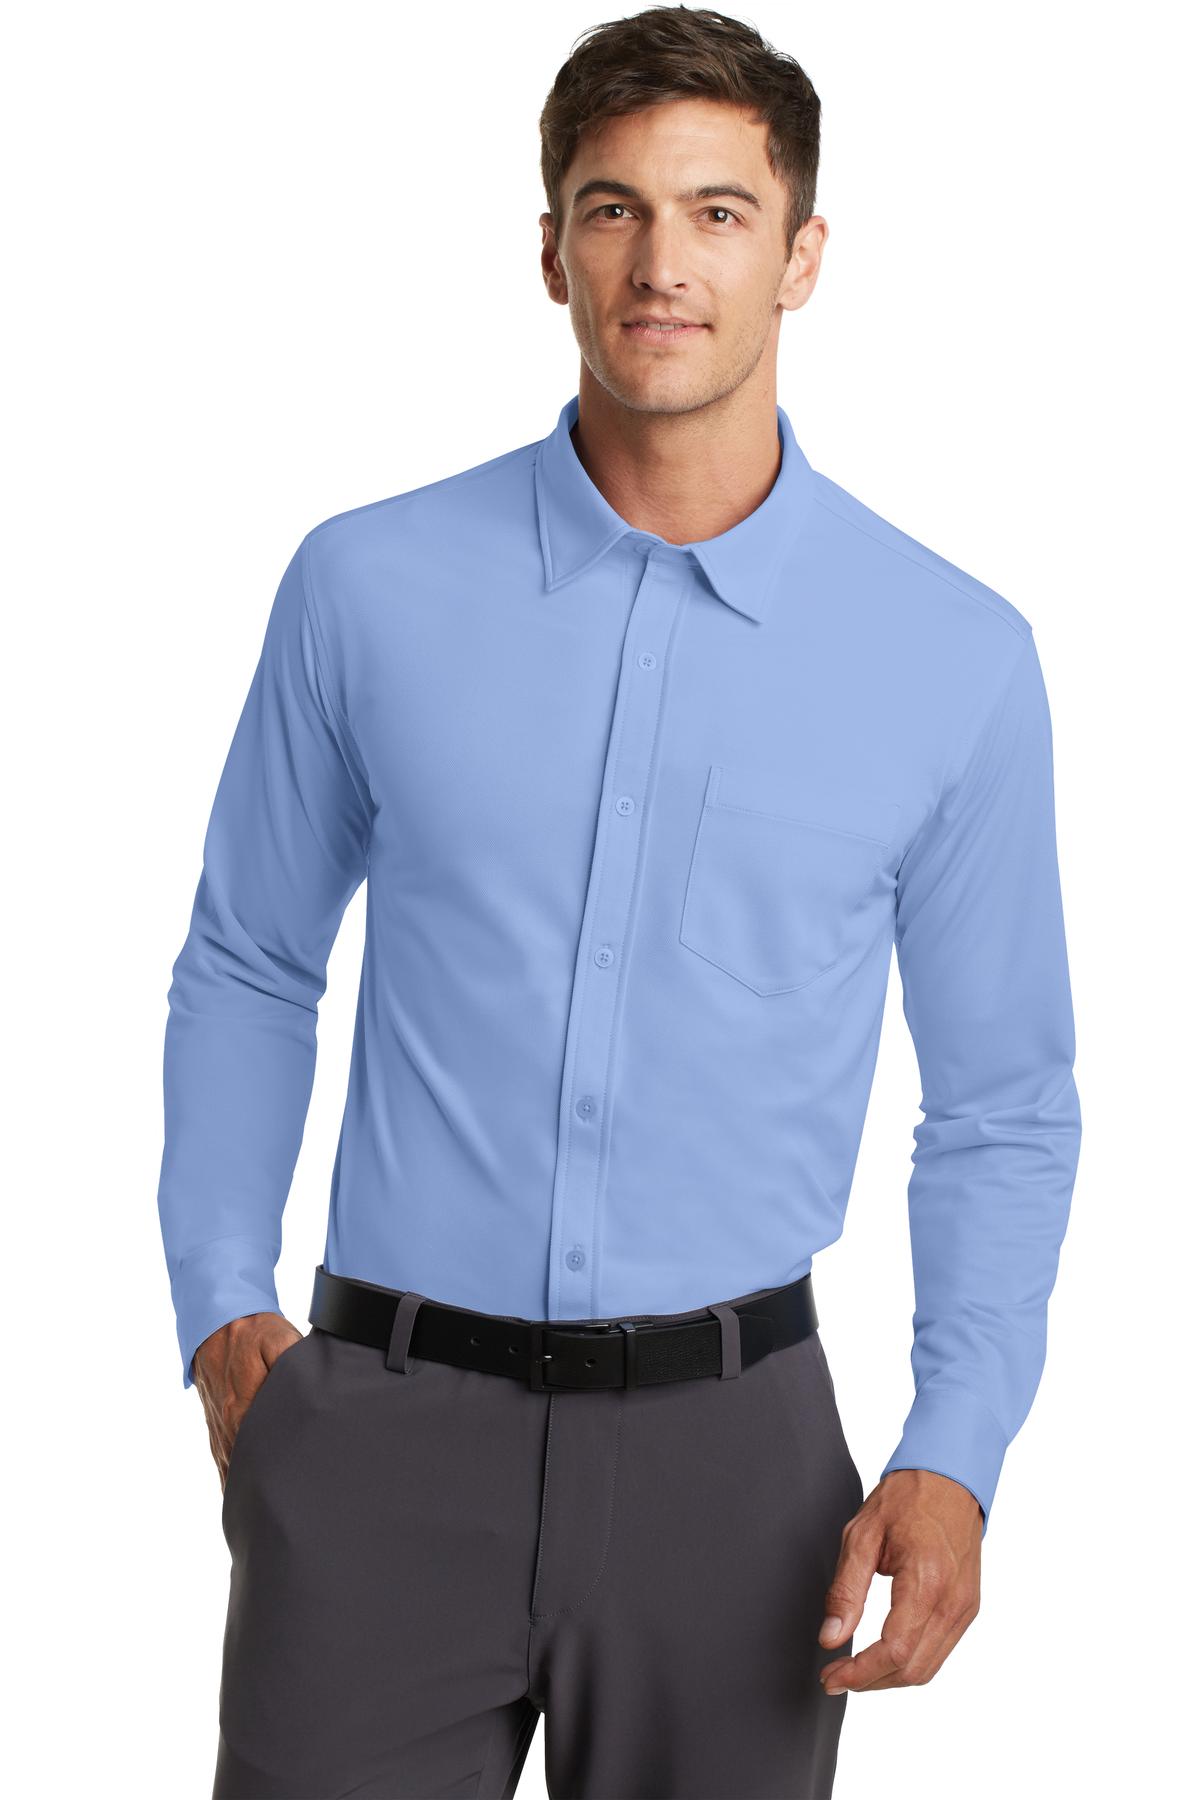 blue dress shirts for men